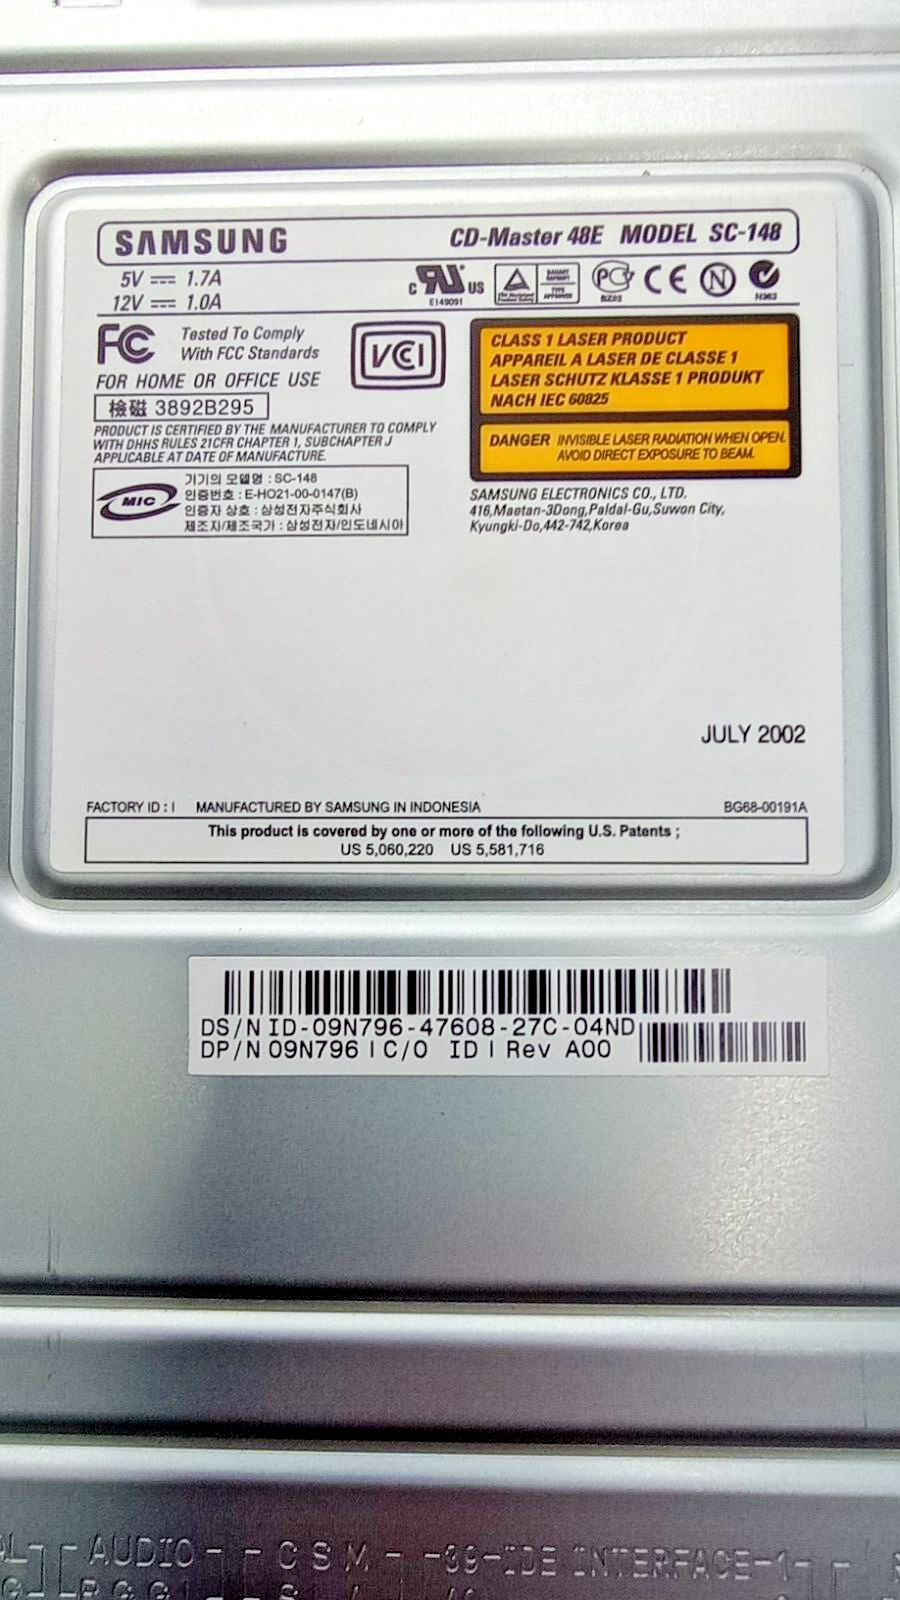 Samsung CD-Master 48E Model #SC-148 Compact Disc Used